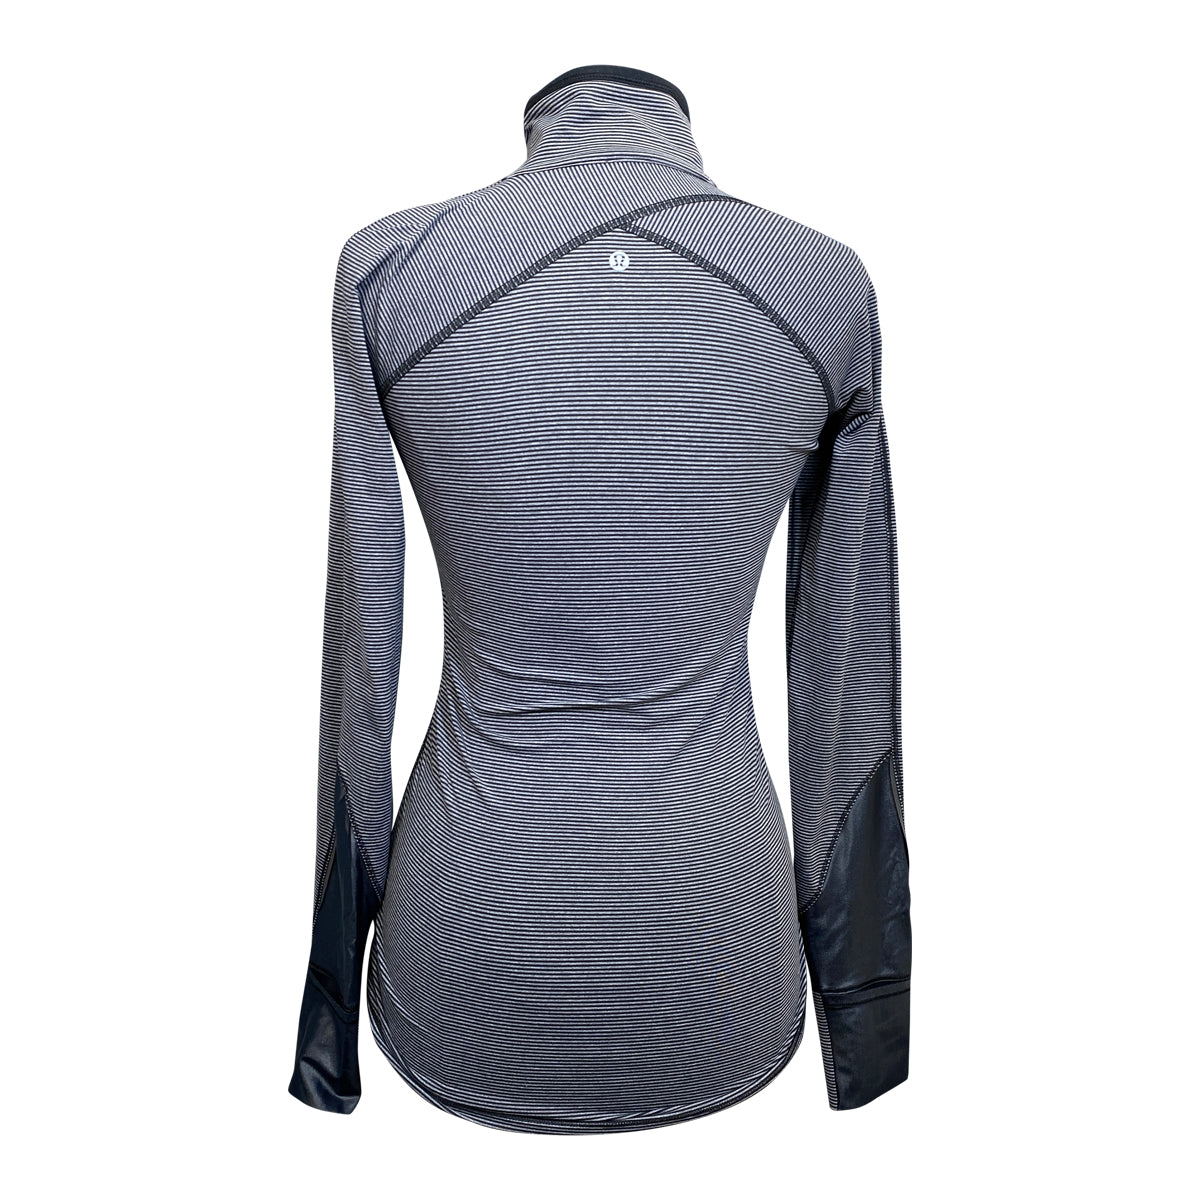 Lululemon 1/4 Zip Pullover Shirt in Black/Grey Stripes